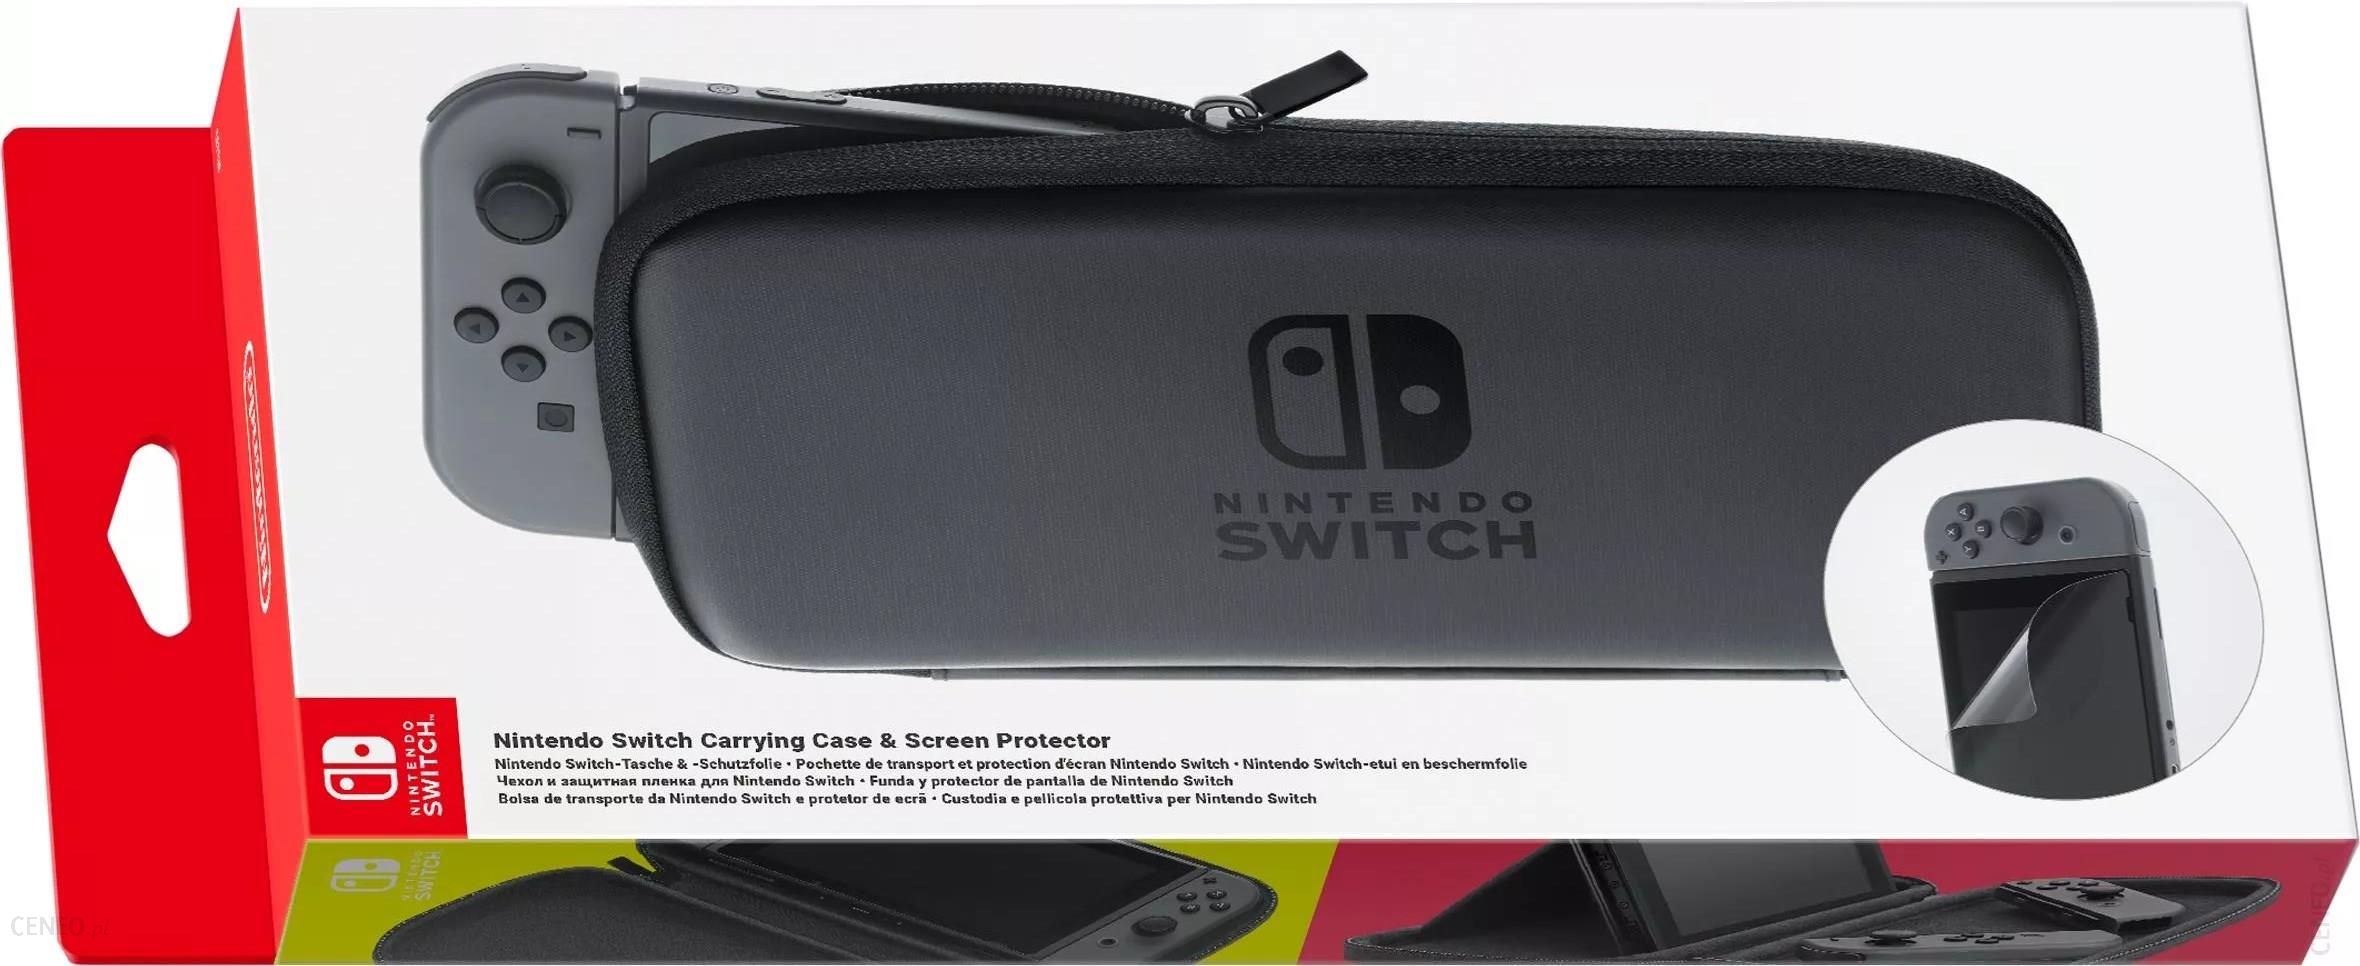 Nintendo switch good. Аксессуары для Нинтендо свитч. Nintendo Switch carrying Case Screen Protector. Protector Nintendo Switch. Аксессуары для Нинтендо свитч Лайт.